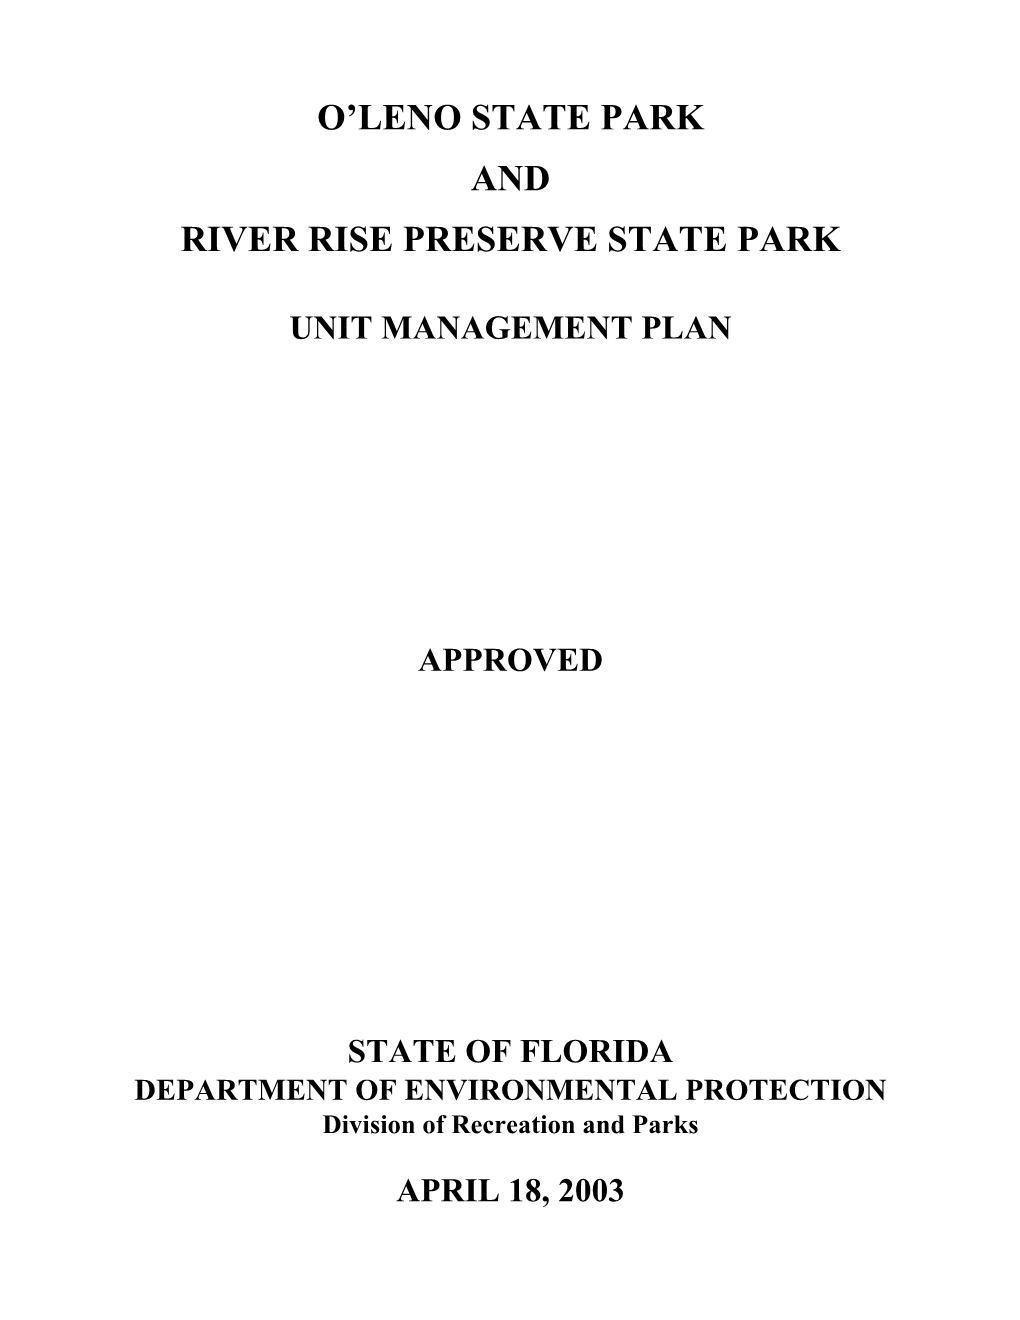 Approved Management Plan (April 18, 2003)